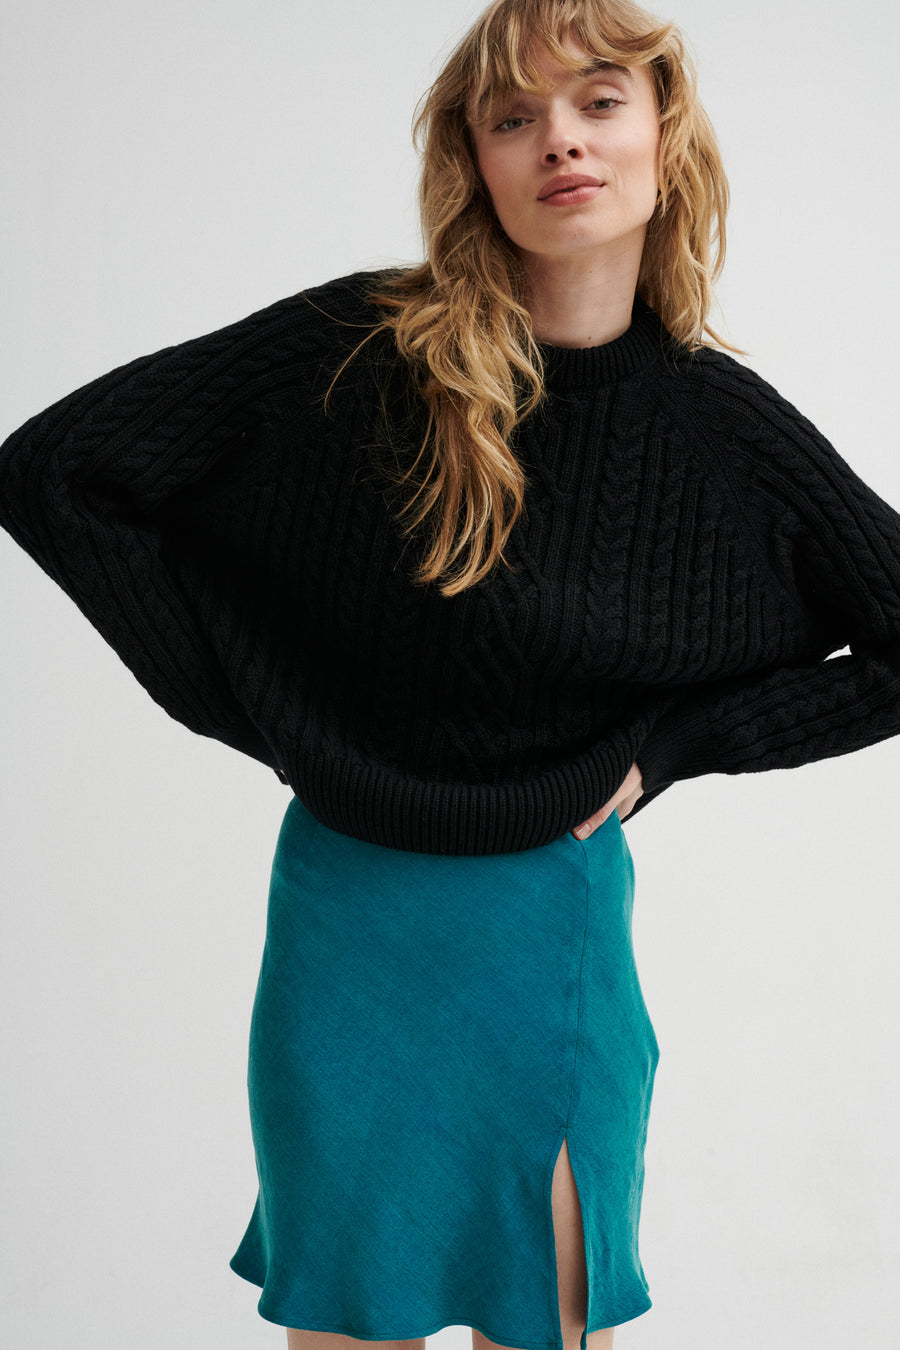 Sweater in organic cotton / 16 / 14 / onyx black